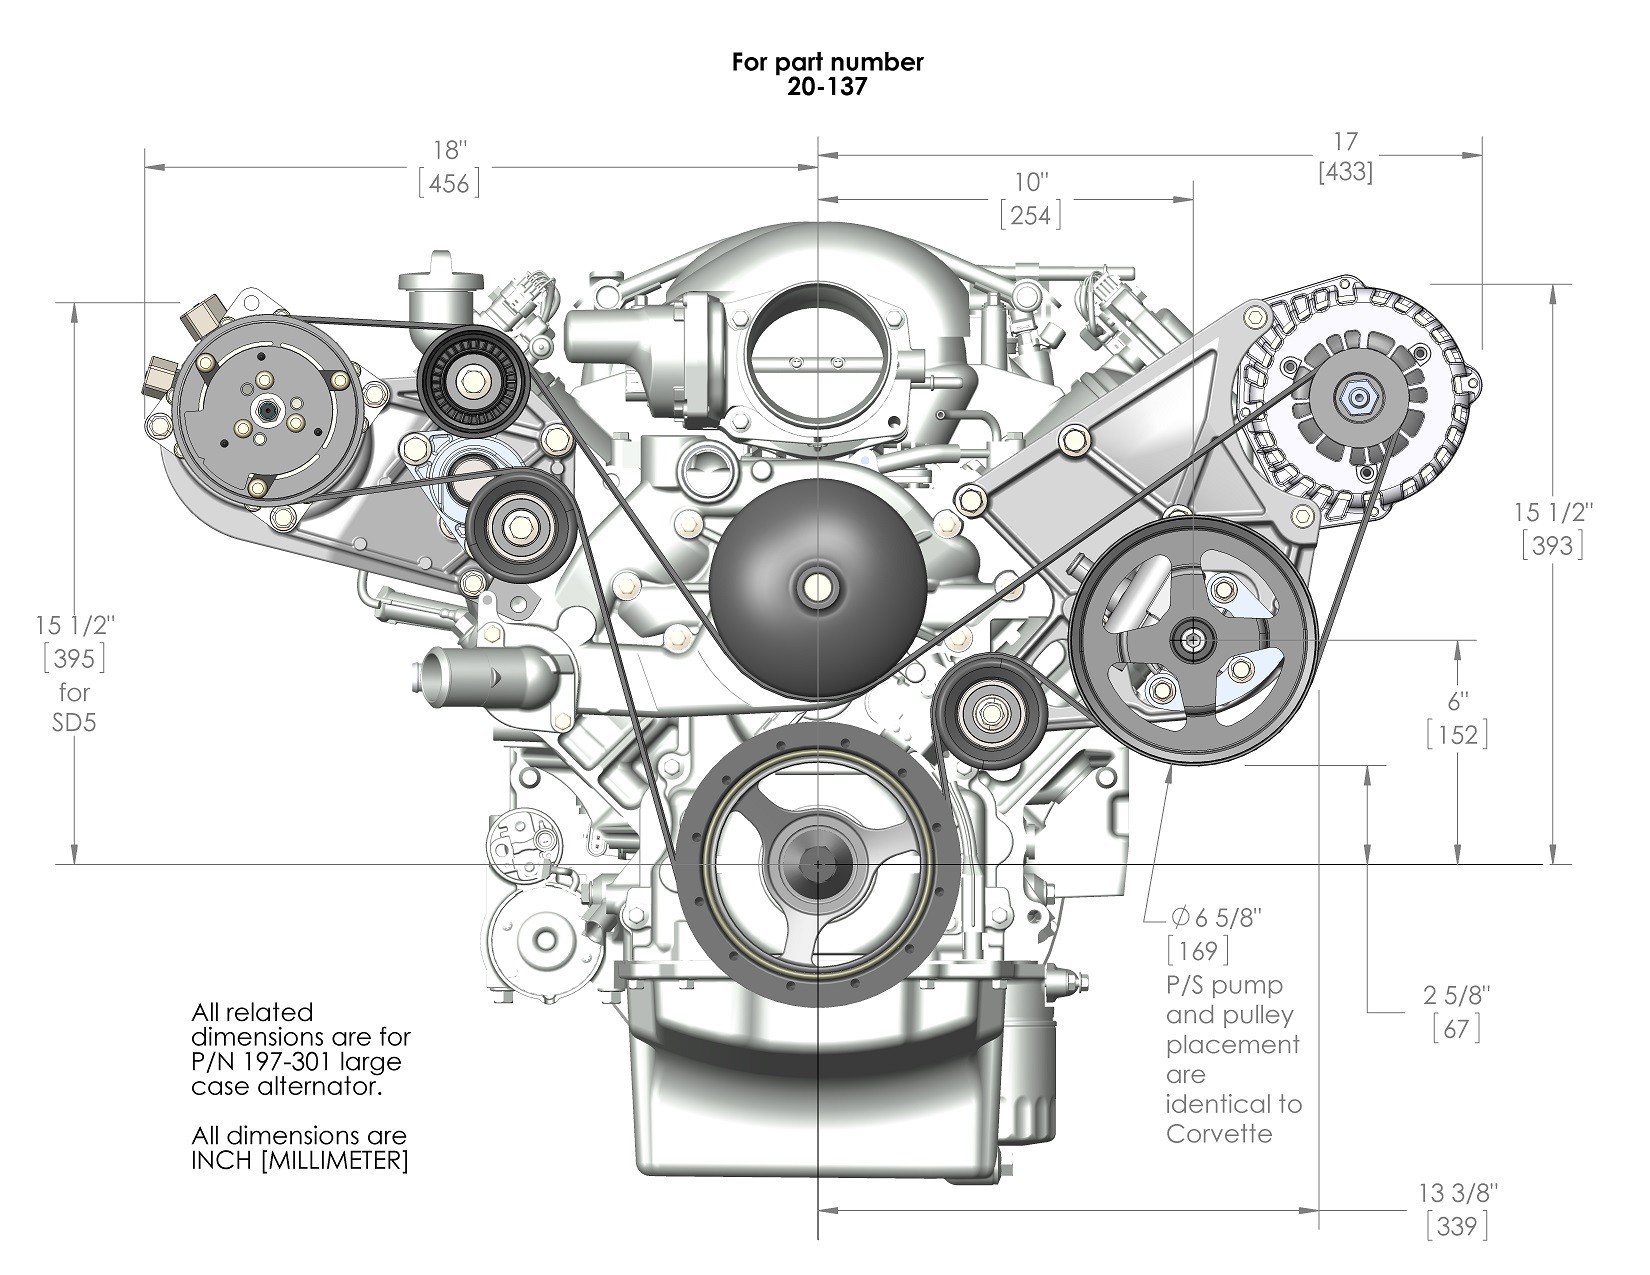 Car Part Diagram 20 137 Dimensions1 16501275 Ls Engines Pinterest Of Car Part Diagram